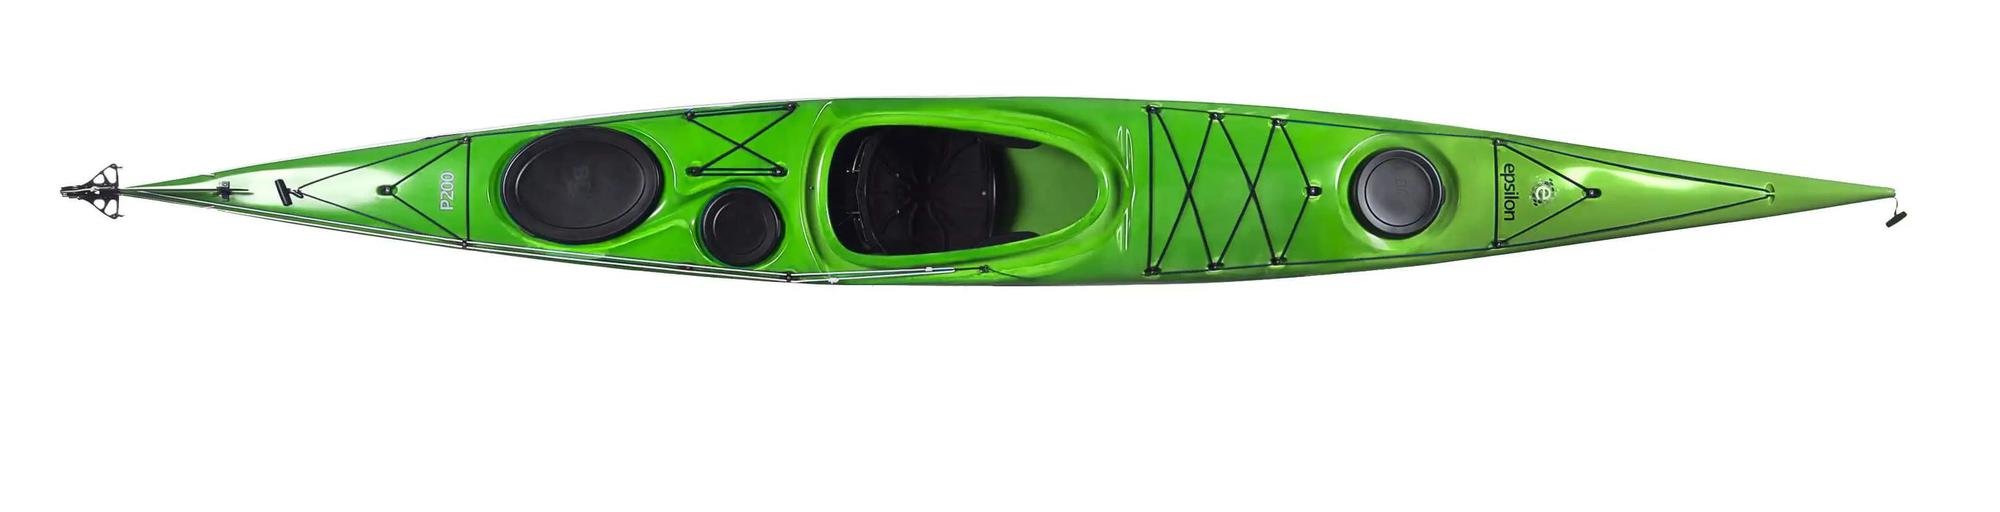 Kayak Boreal Epsilon P200 - Color: Verde